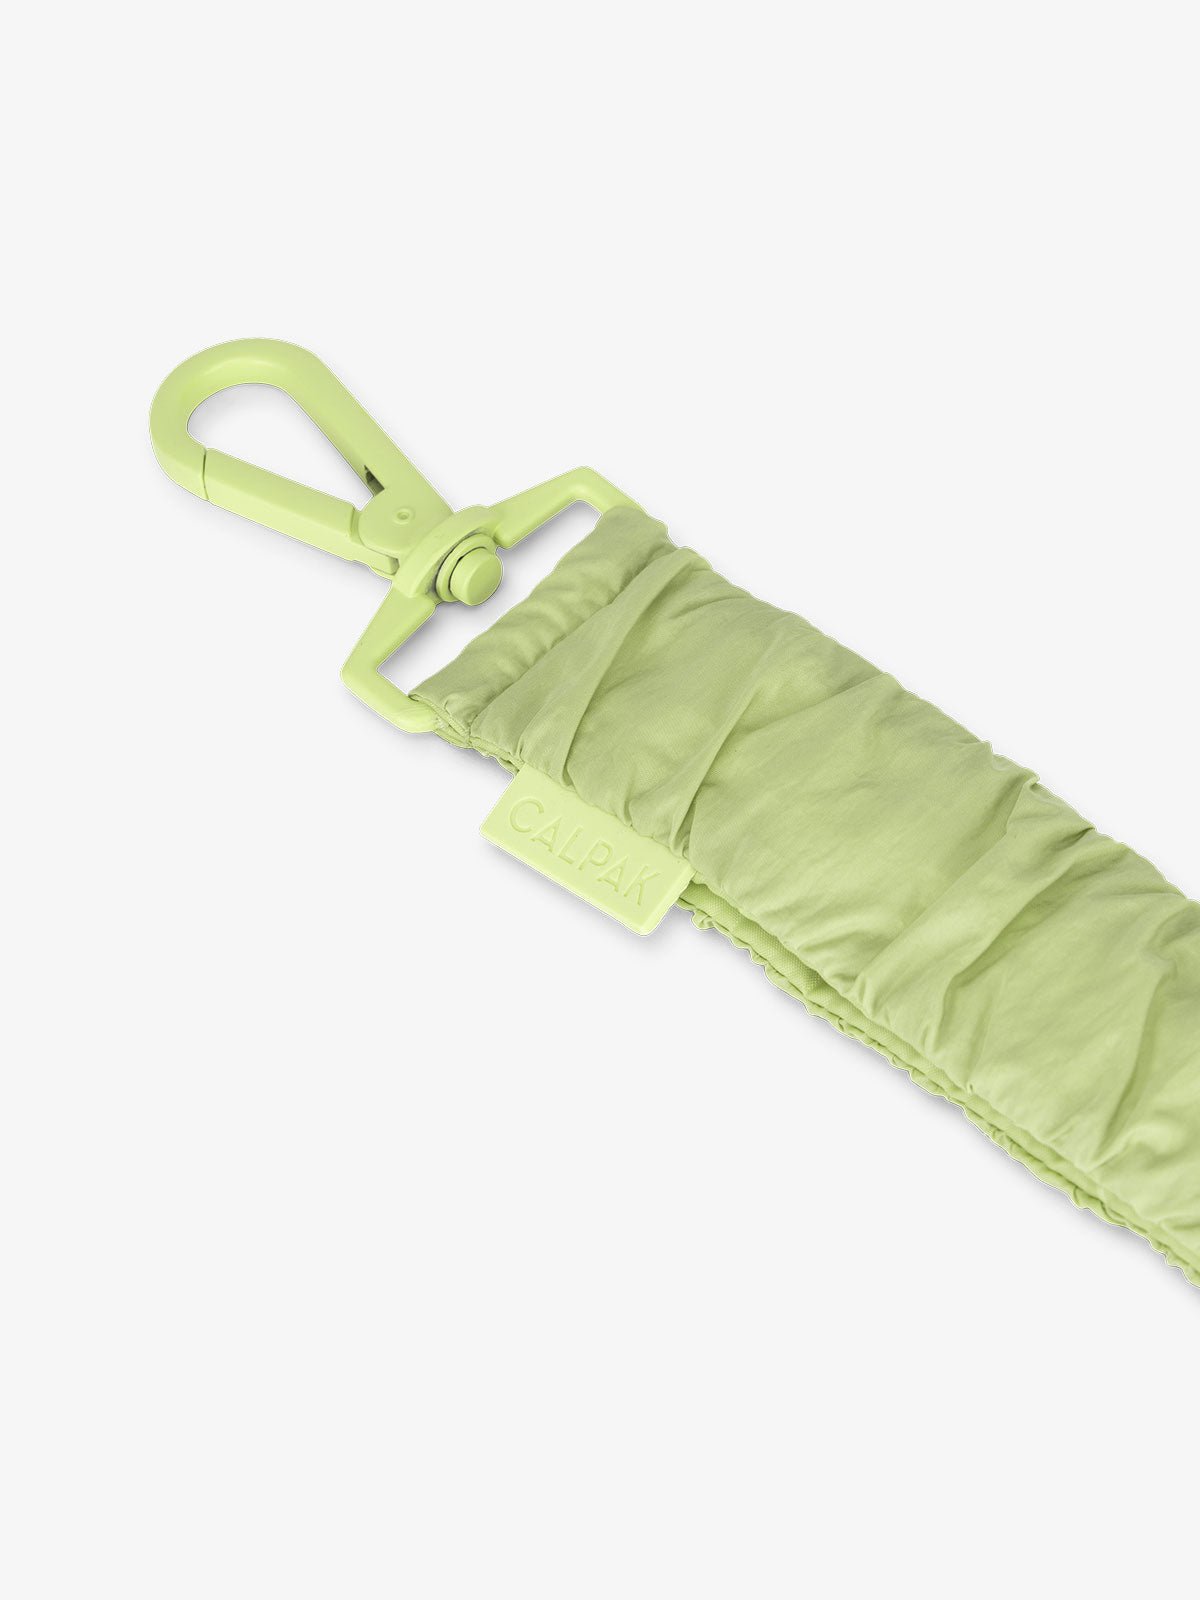 CALPAK diaper bag stroller straps with dog clips for d-rings in lime green